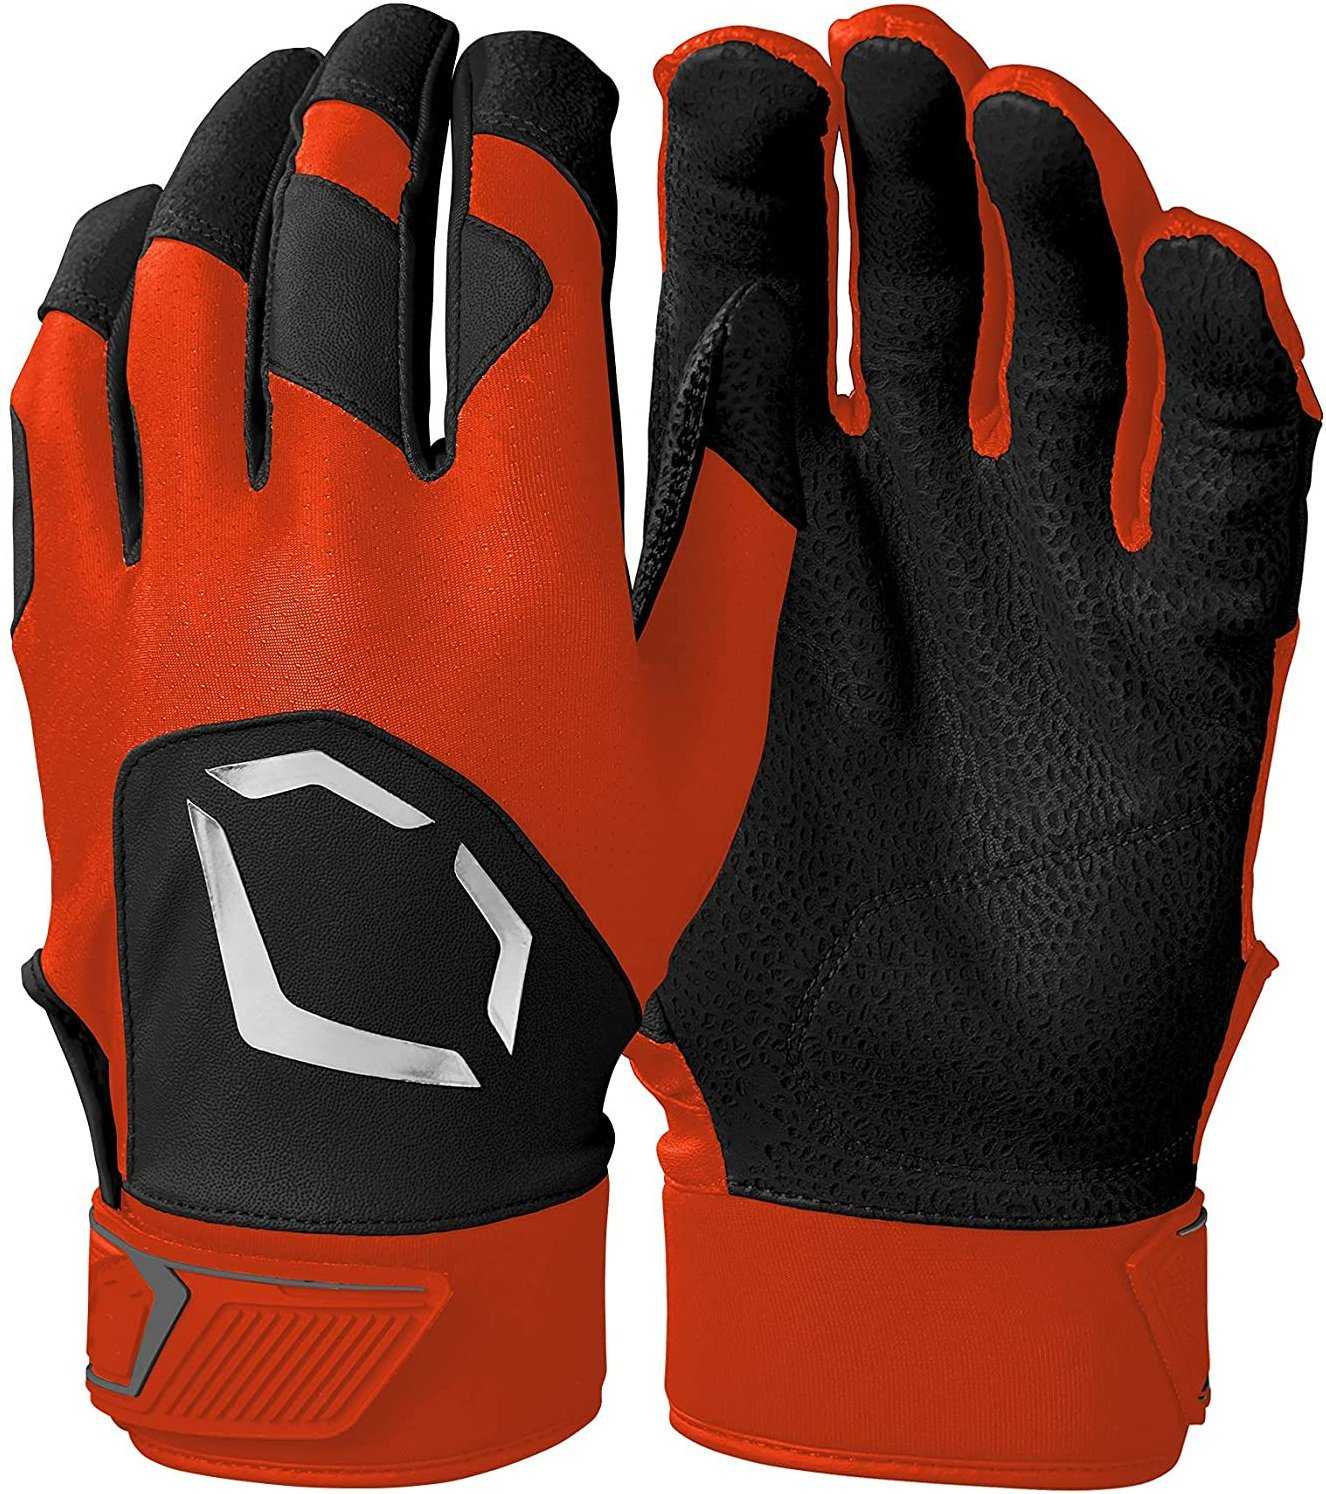 EvoShield Adult Evo Standout Batting Gloves - Orange - HIT A Double